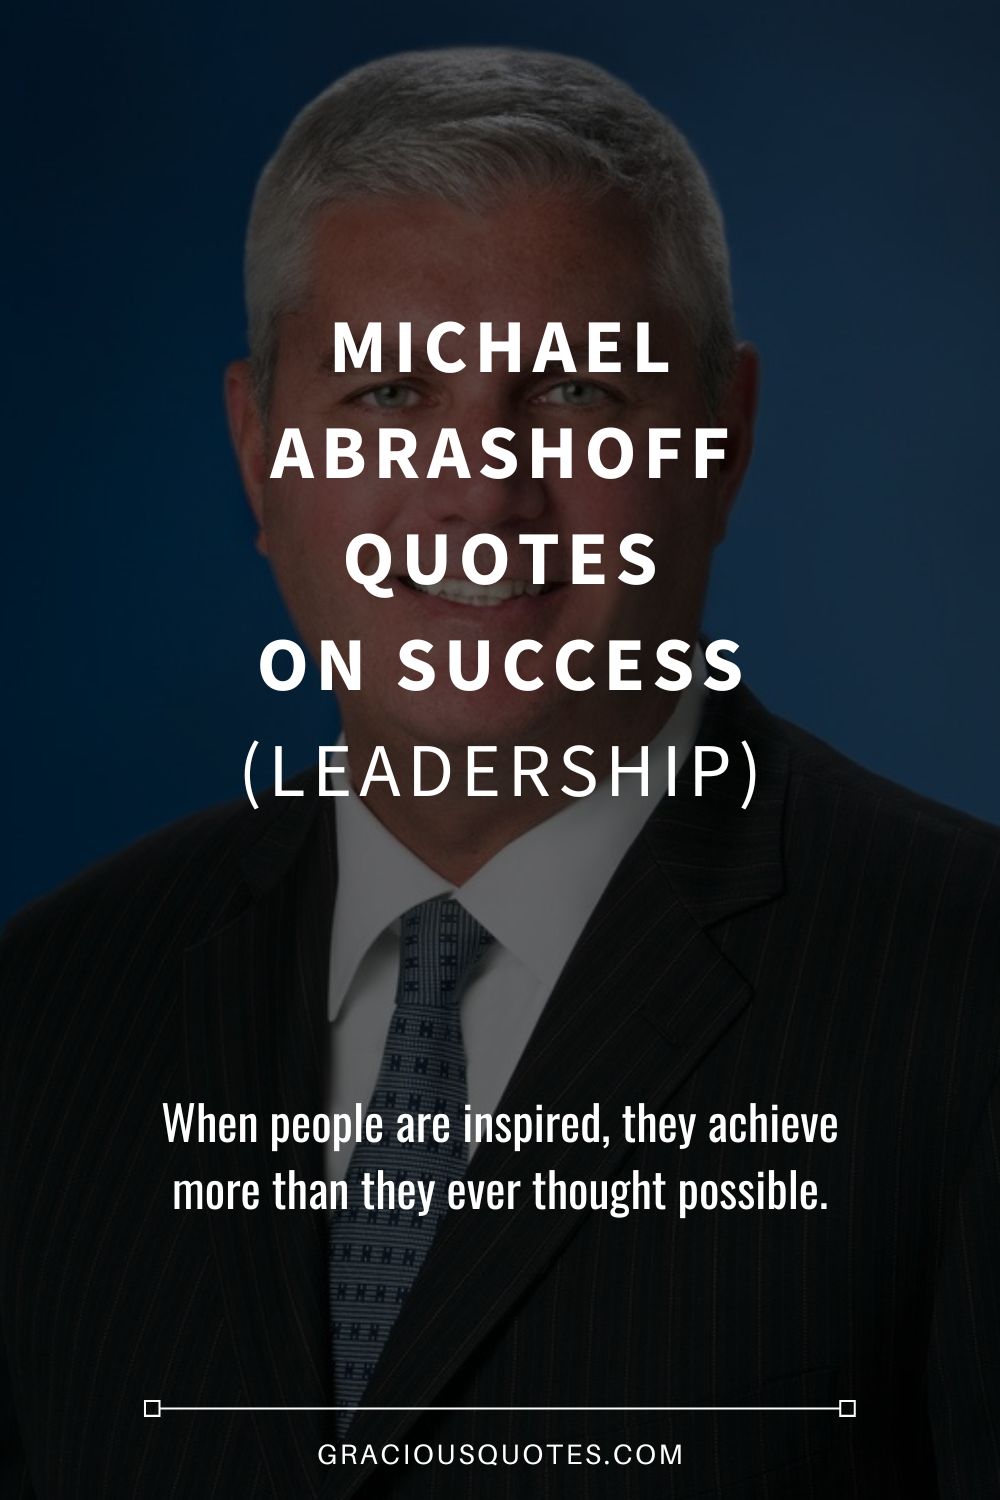 Michael Abrashoff Quotes on Success (LEADERSHIP) - Gracious Quotes